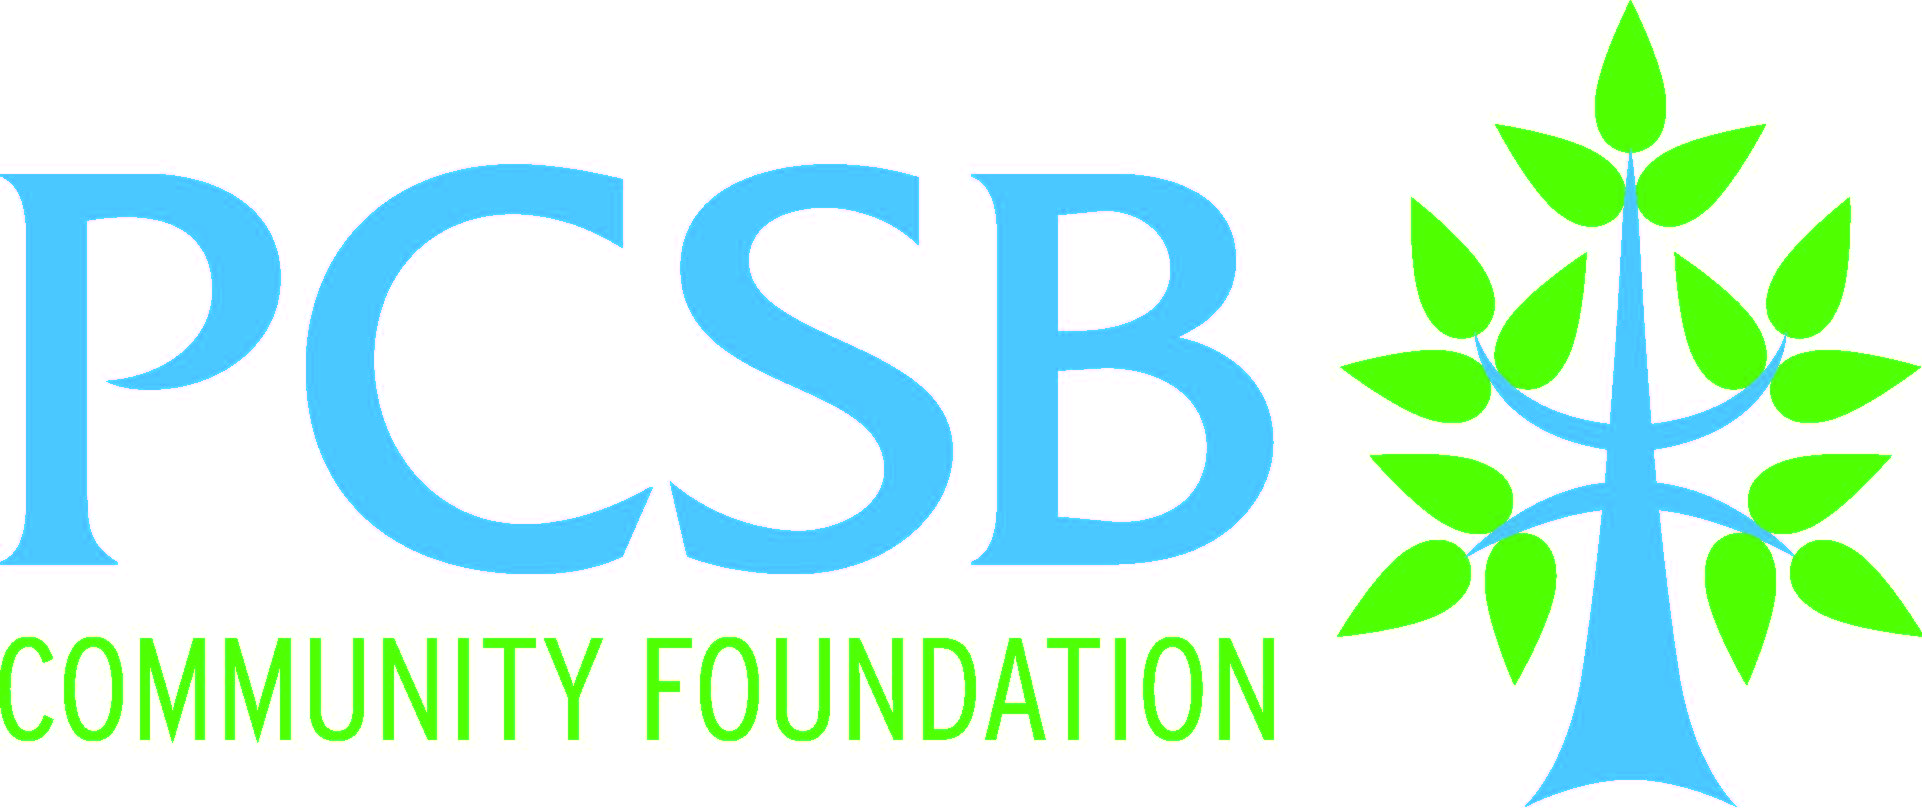 PCSB Community Foundation